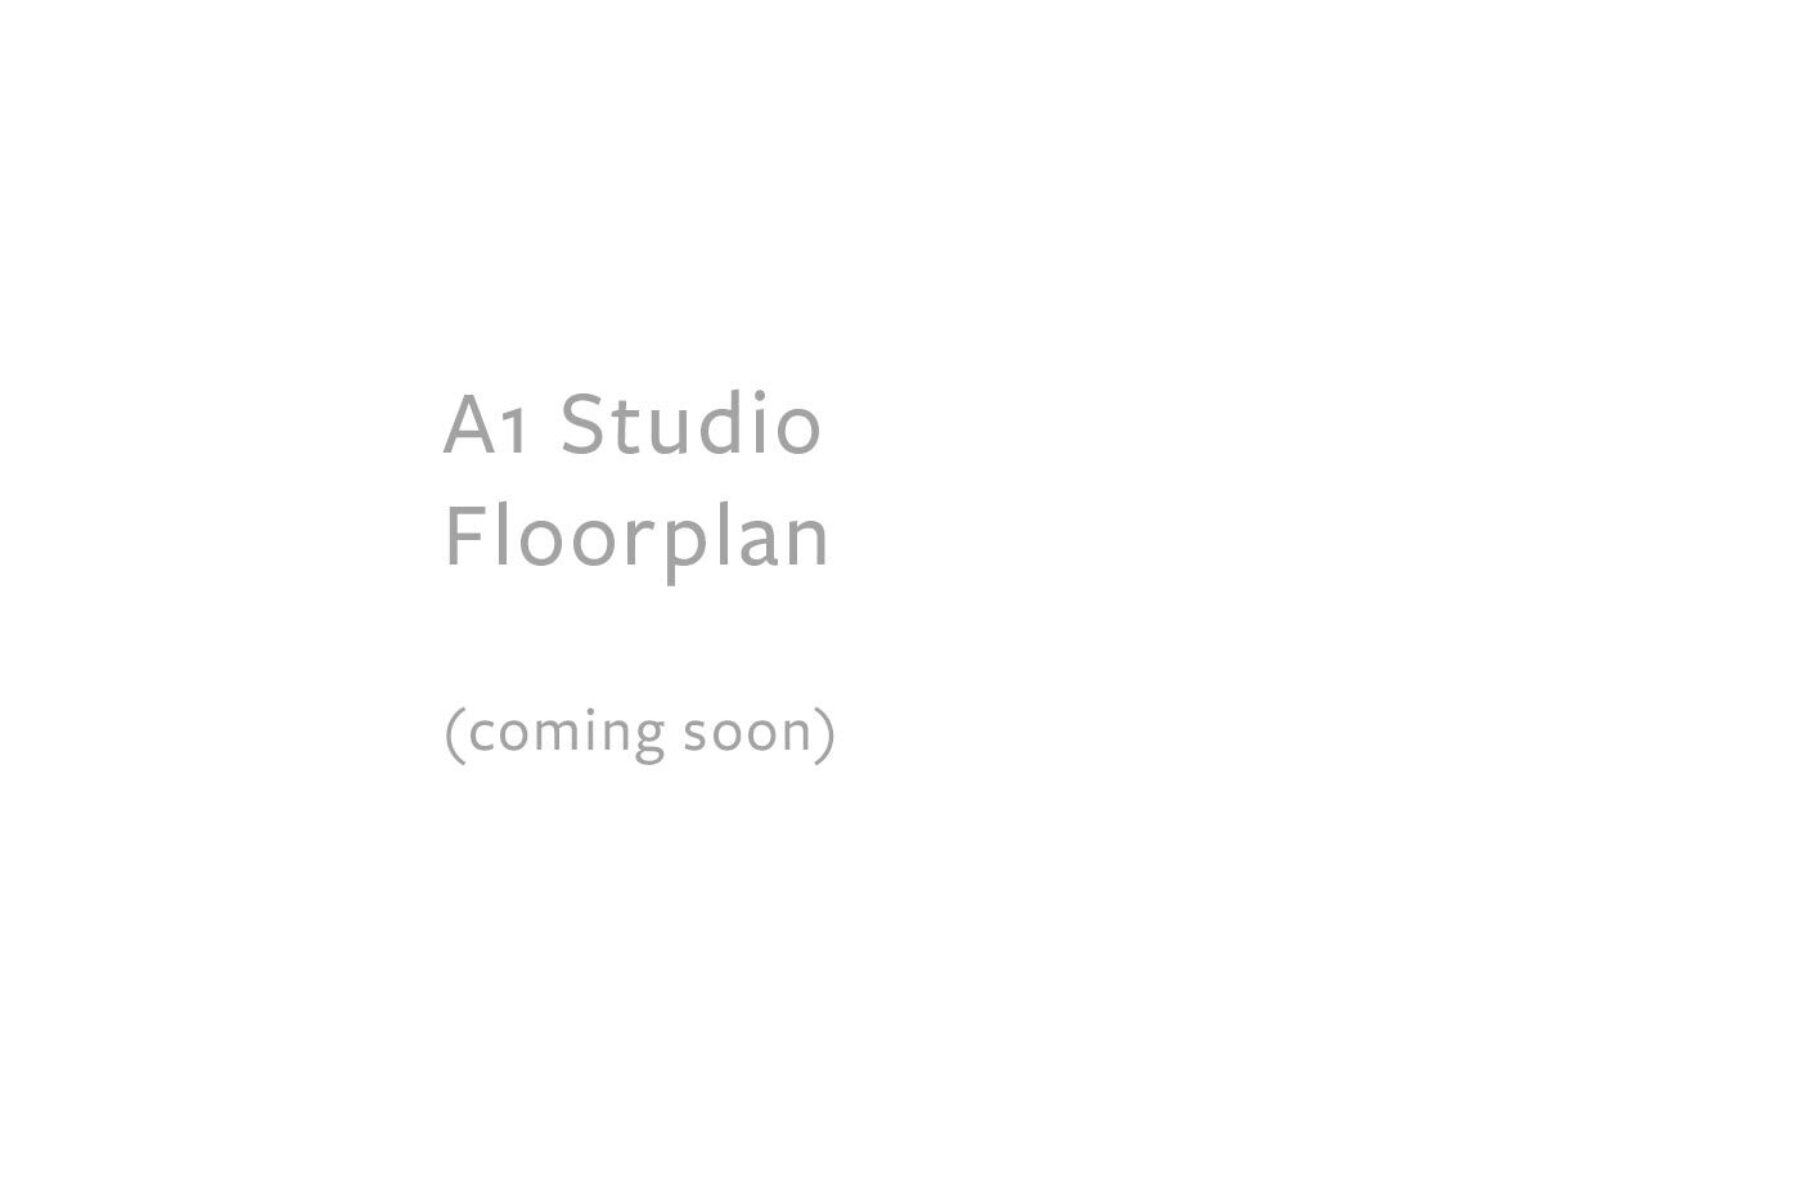 Plan Image: A1 Studio